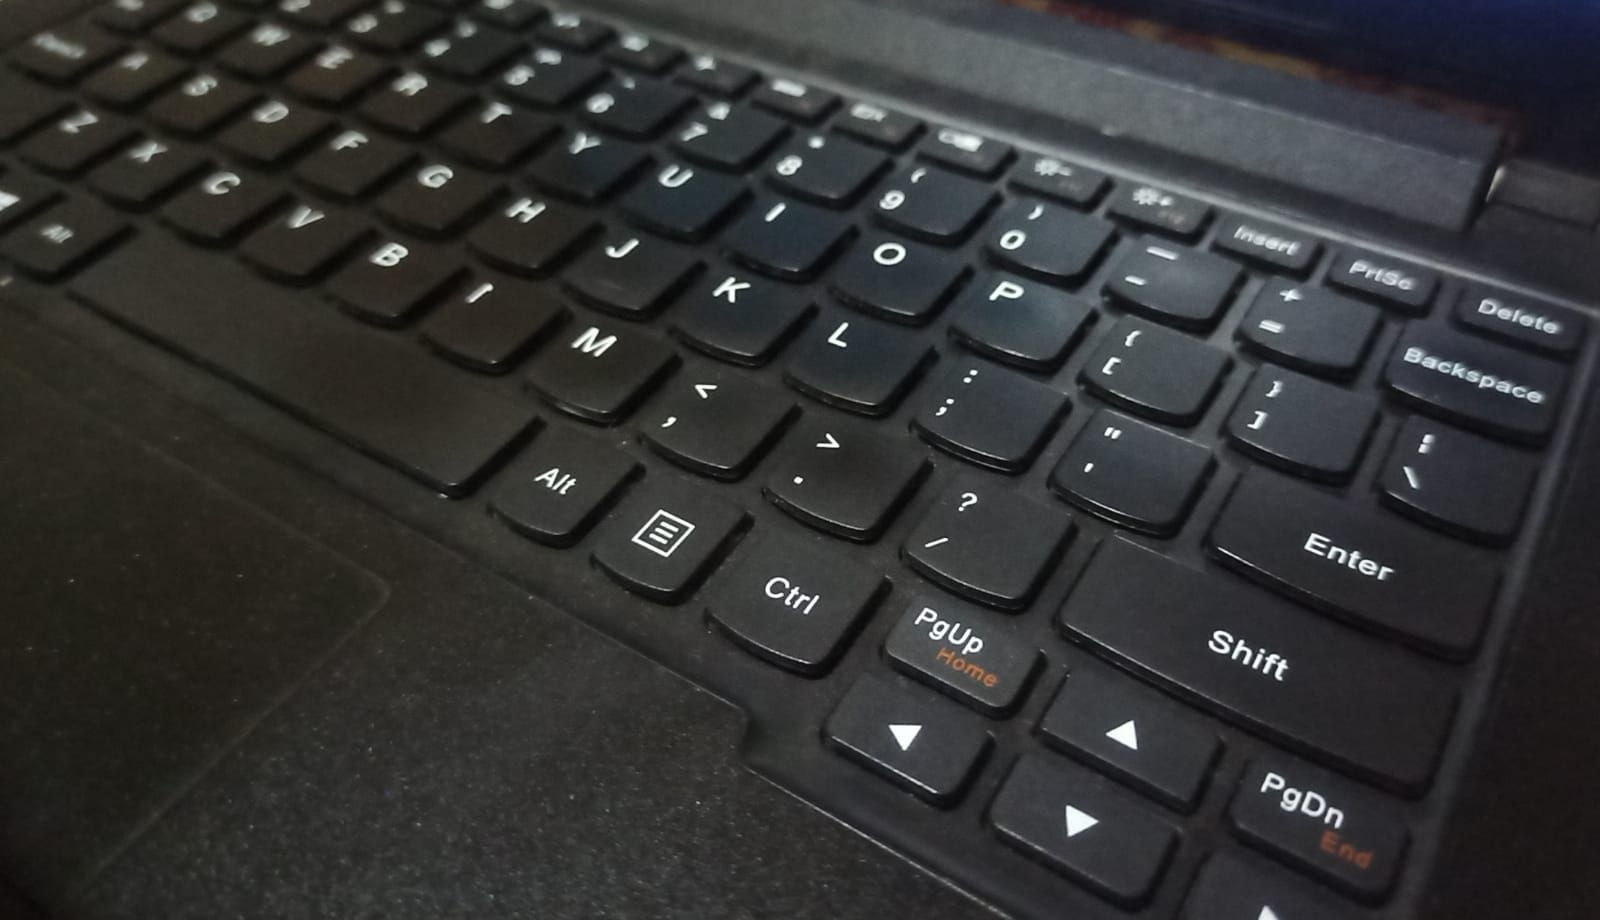 Cara Mematikan Laptop dengan Keyboard